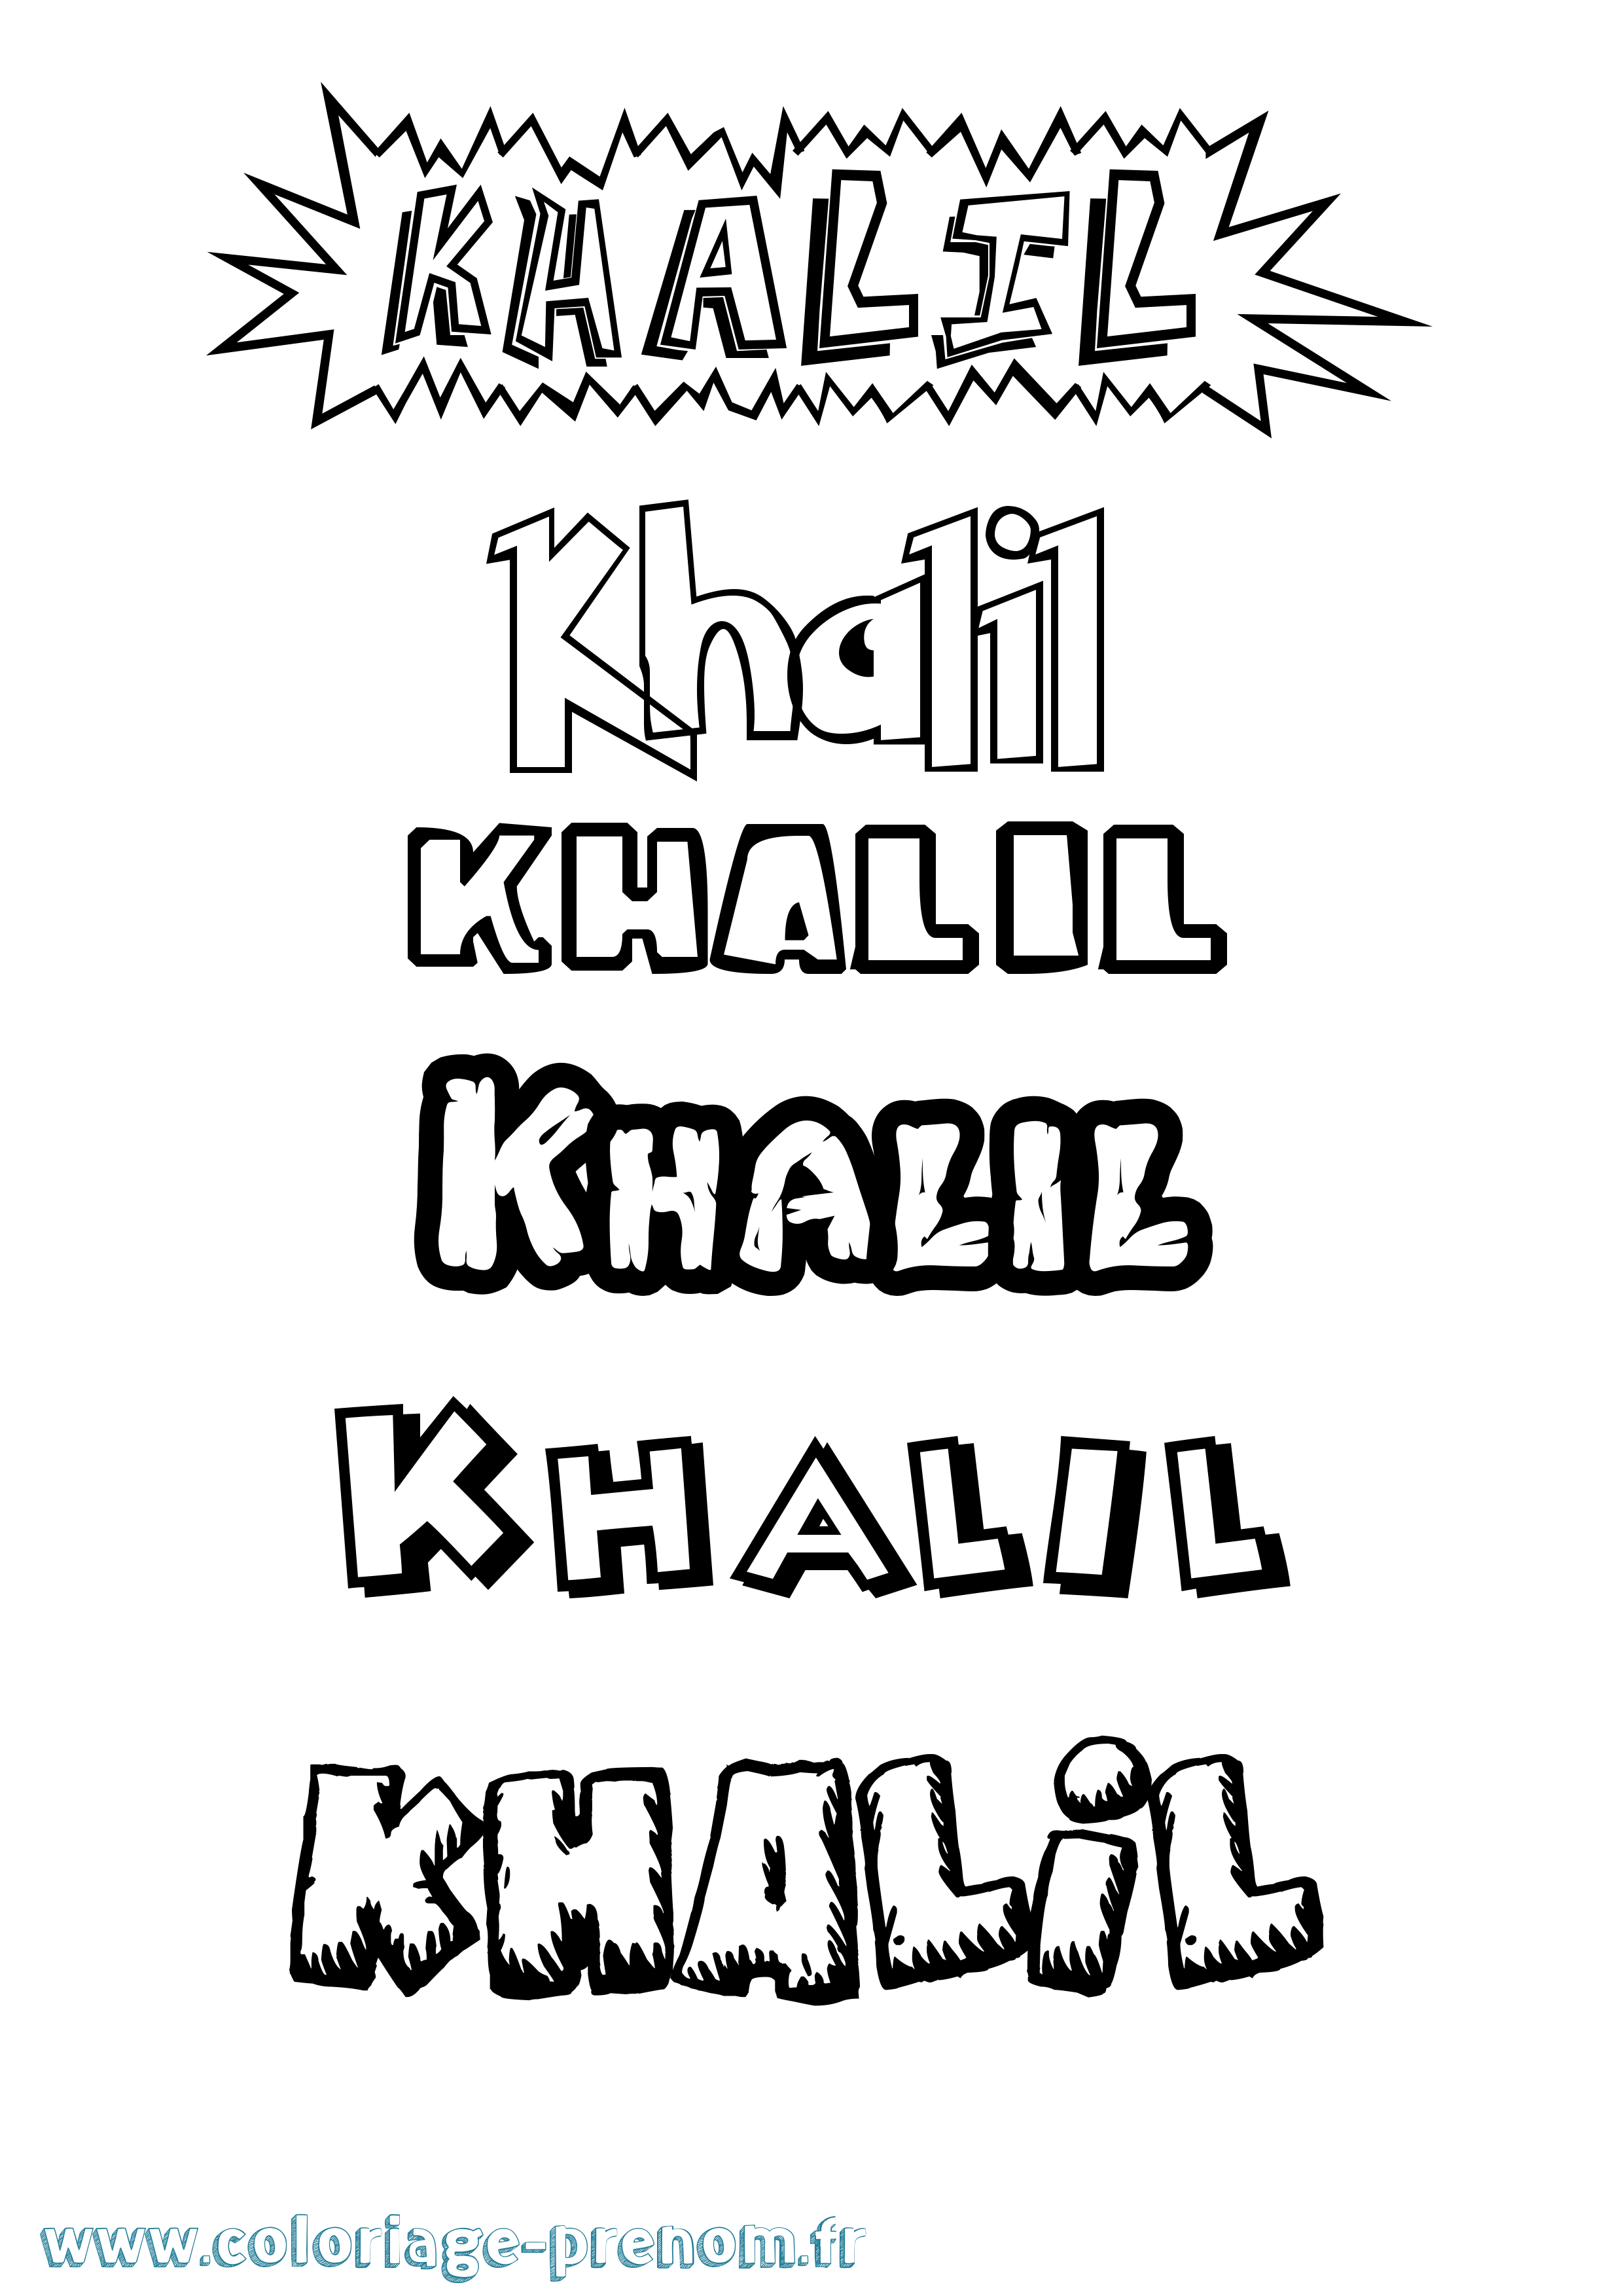 Coloriage prénom Khalil